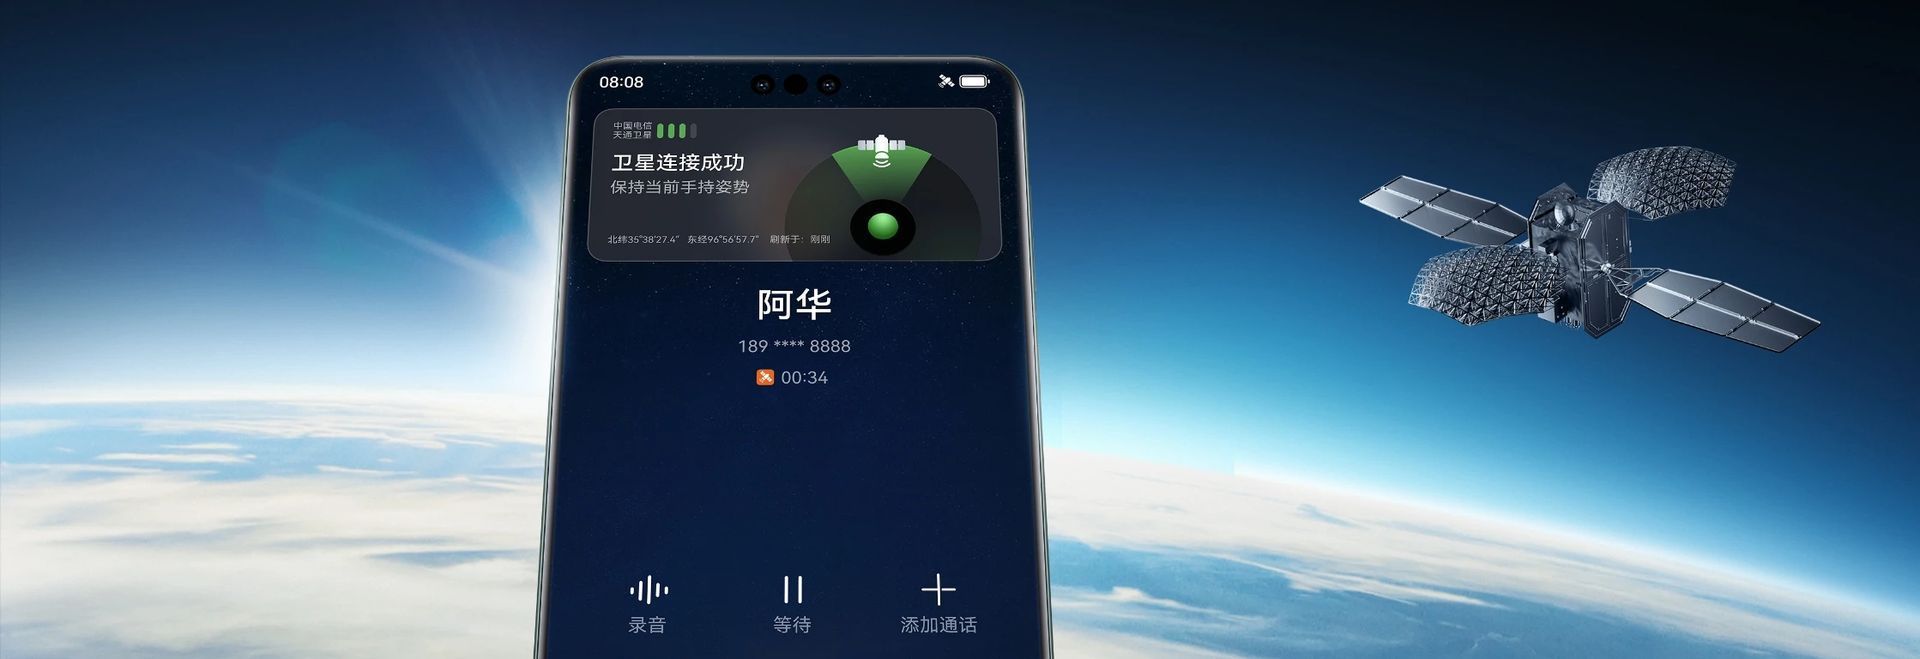 Huawei teardown displays China chip breakthrough